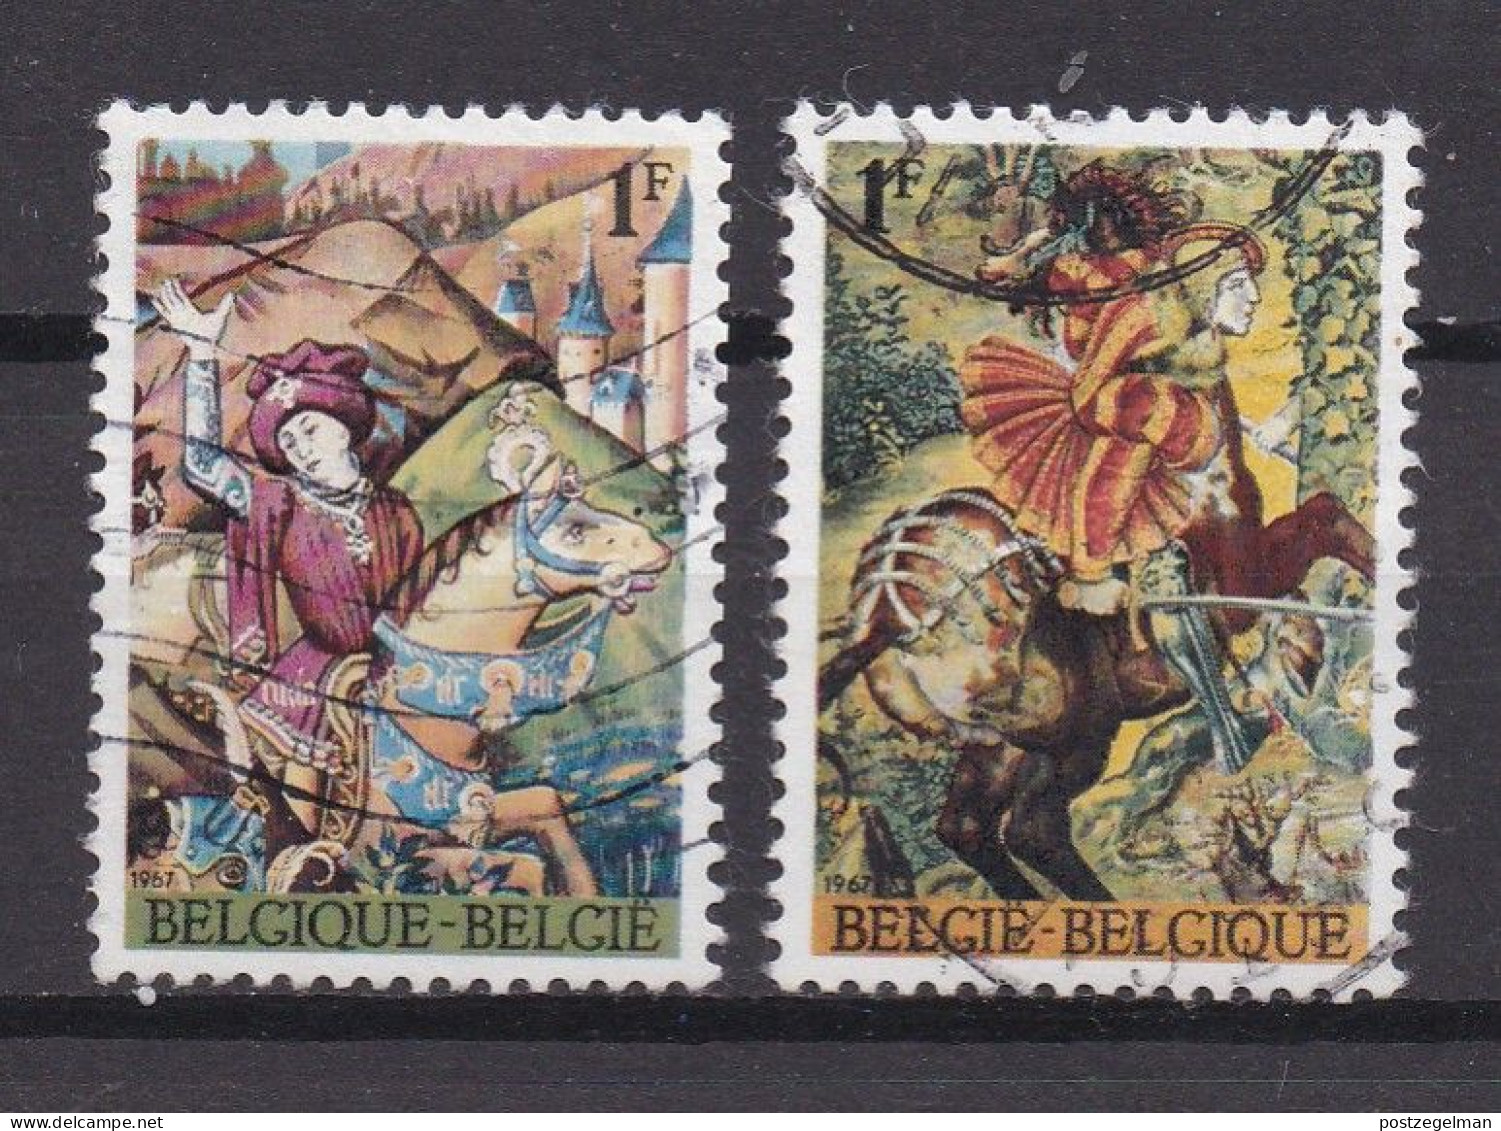 BELGIUM,1967, Used Stamp(s), Lodewyk De Raet , M1482-1483 , Scan 10445, - Gebruikt